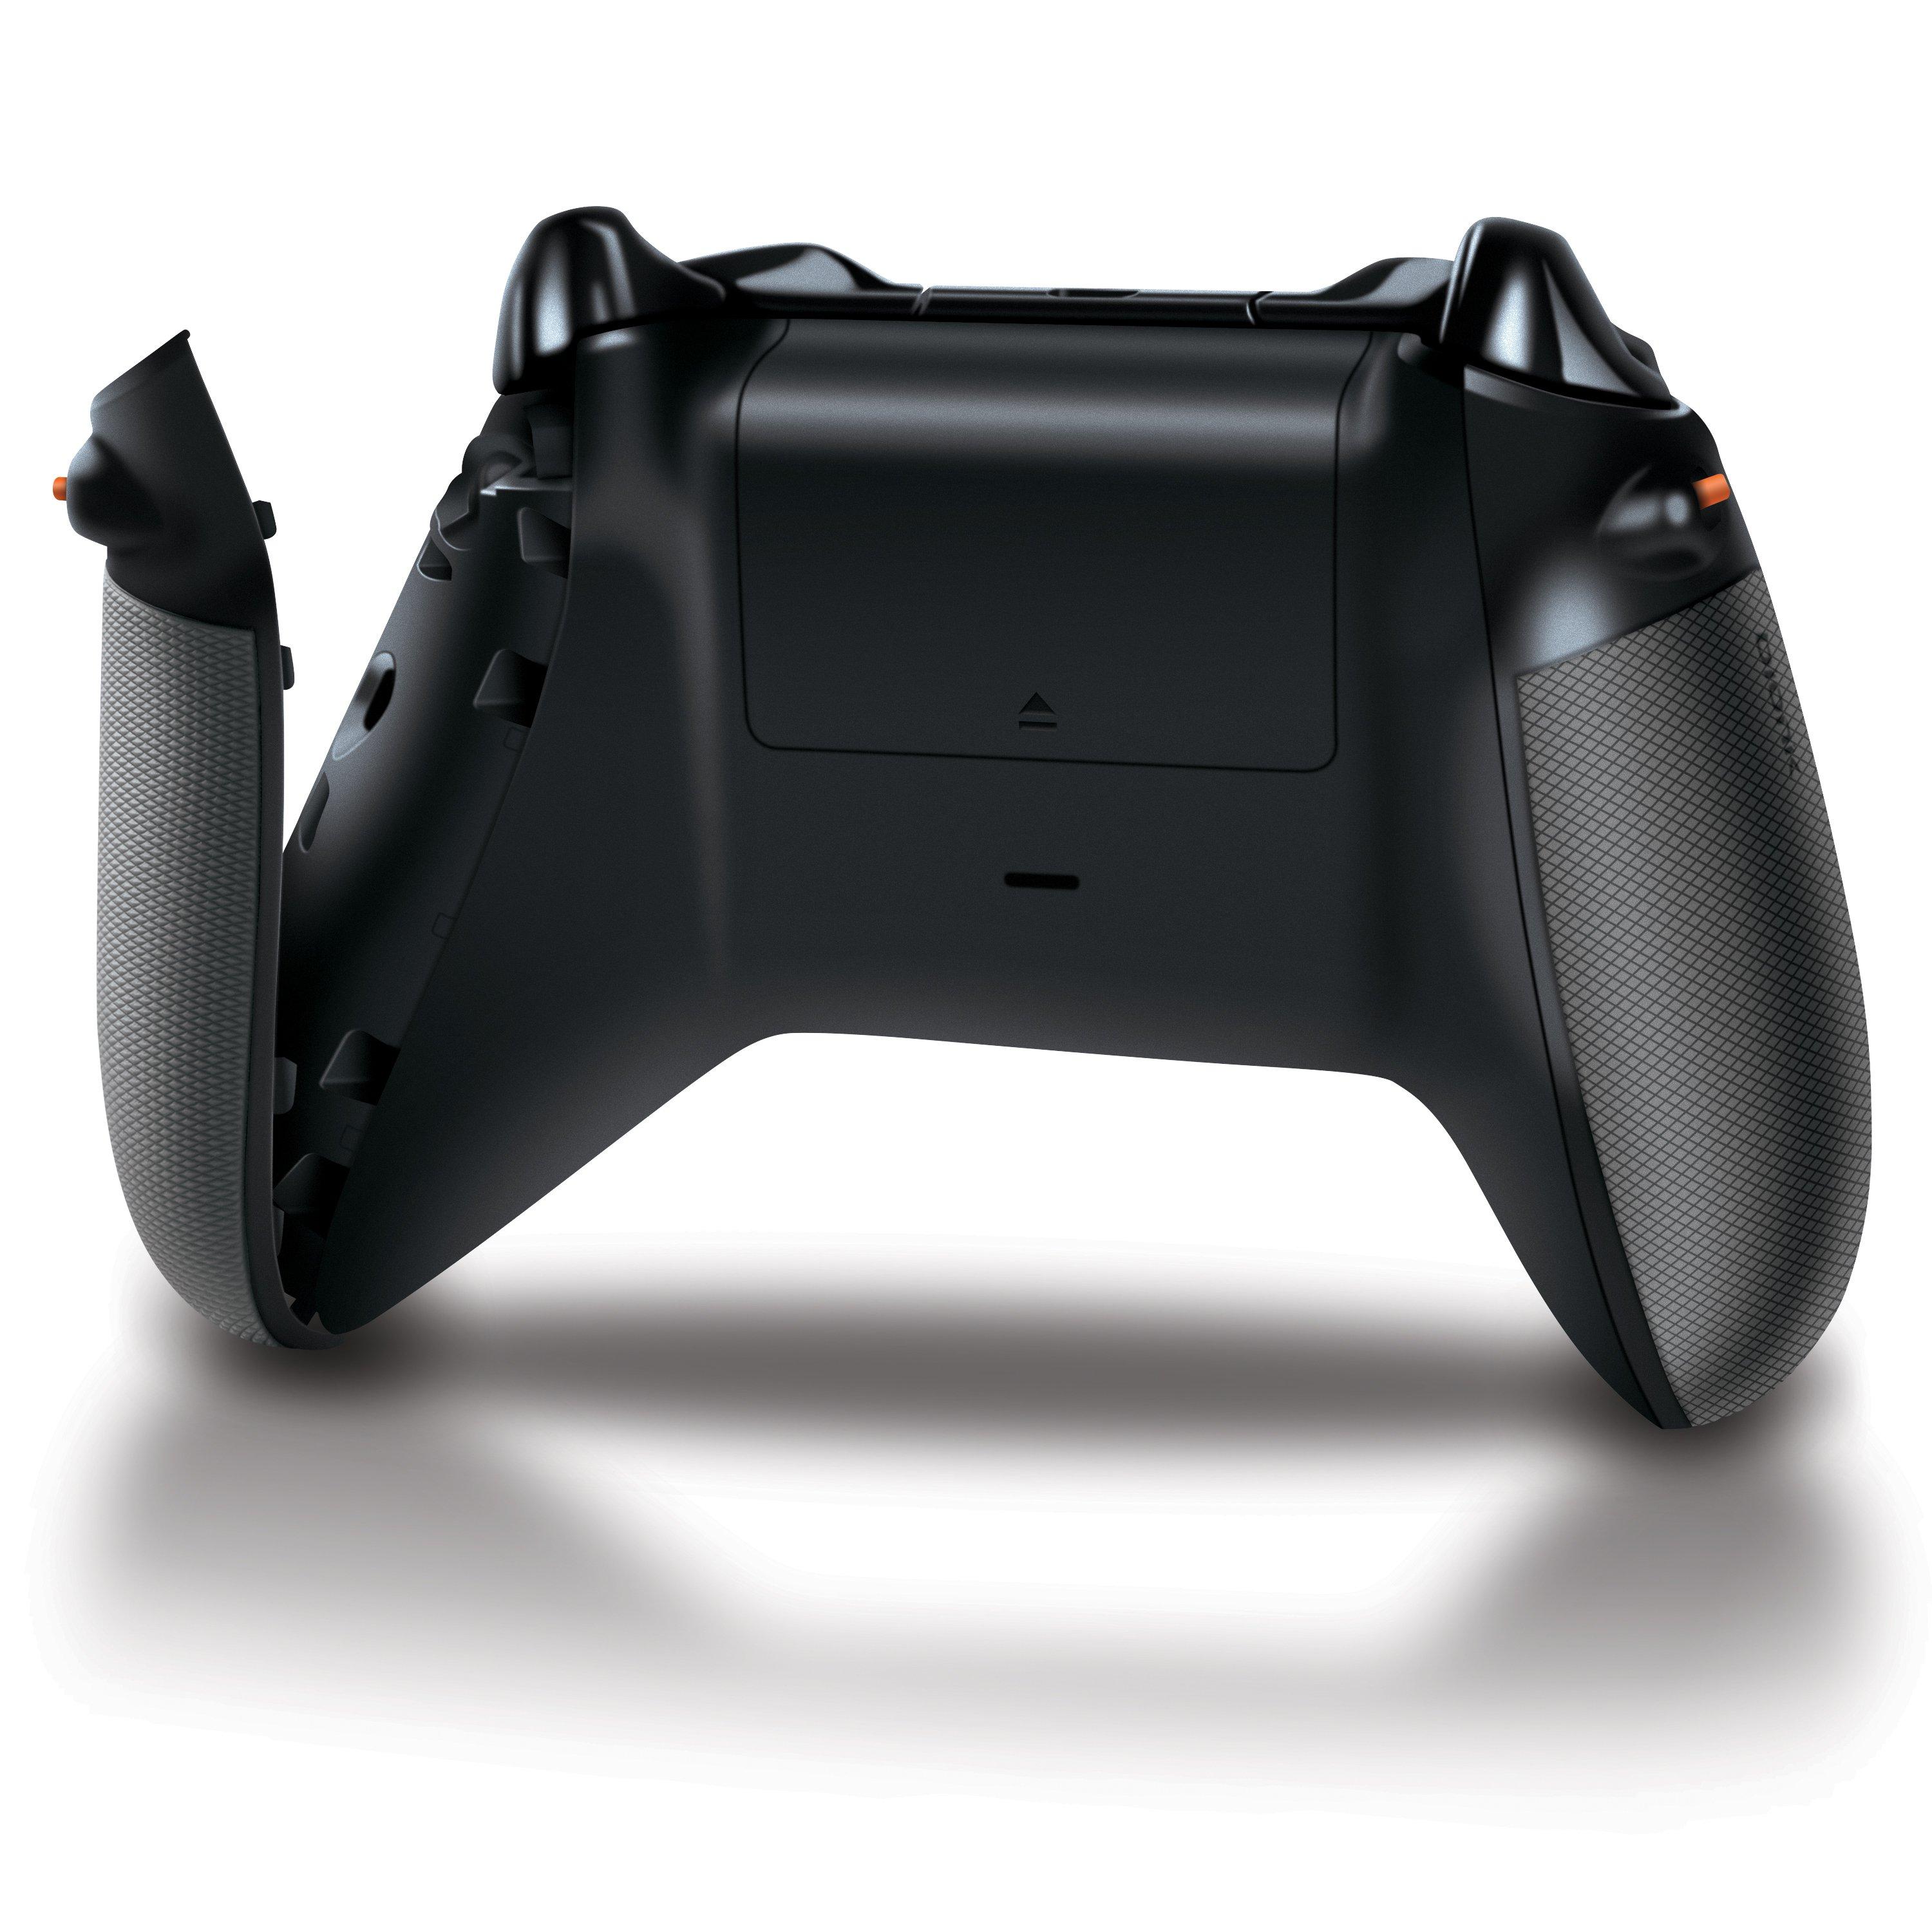 bionik Quickshot Dual Trigger Lock Controller Kit for Xbox One